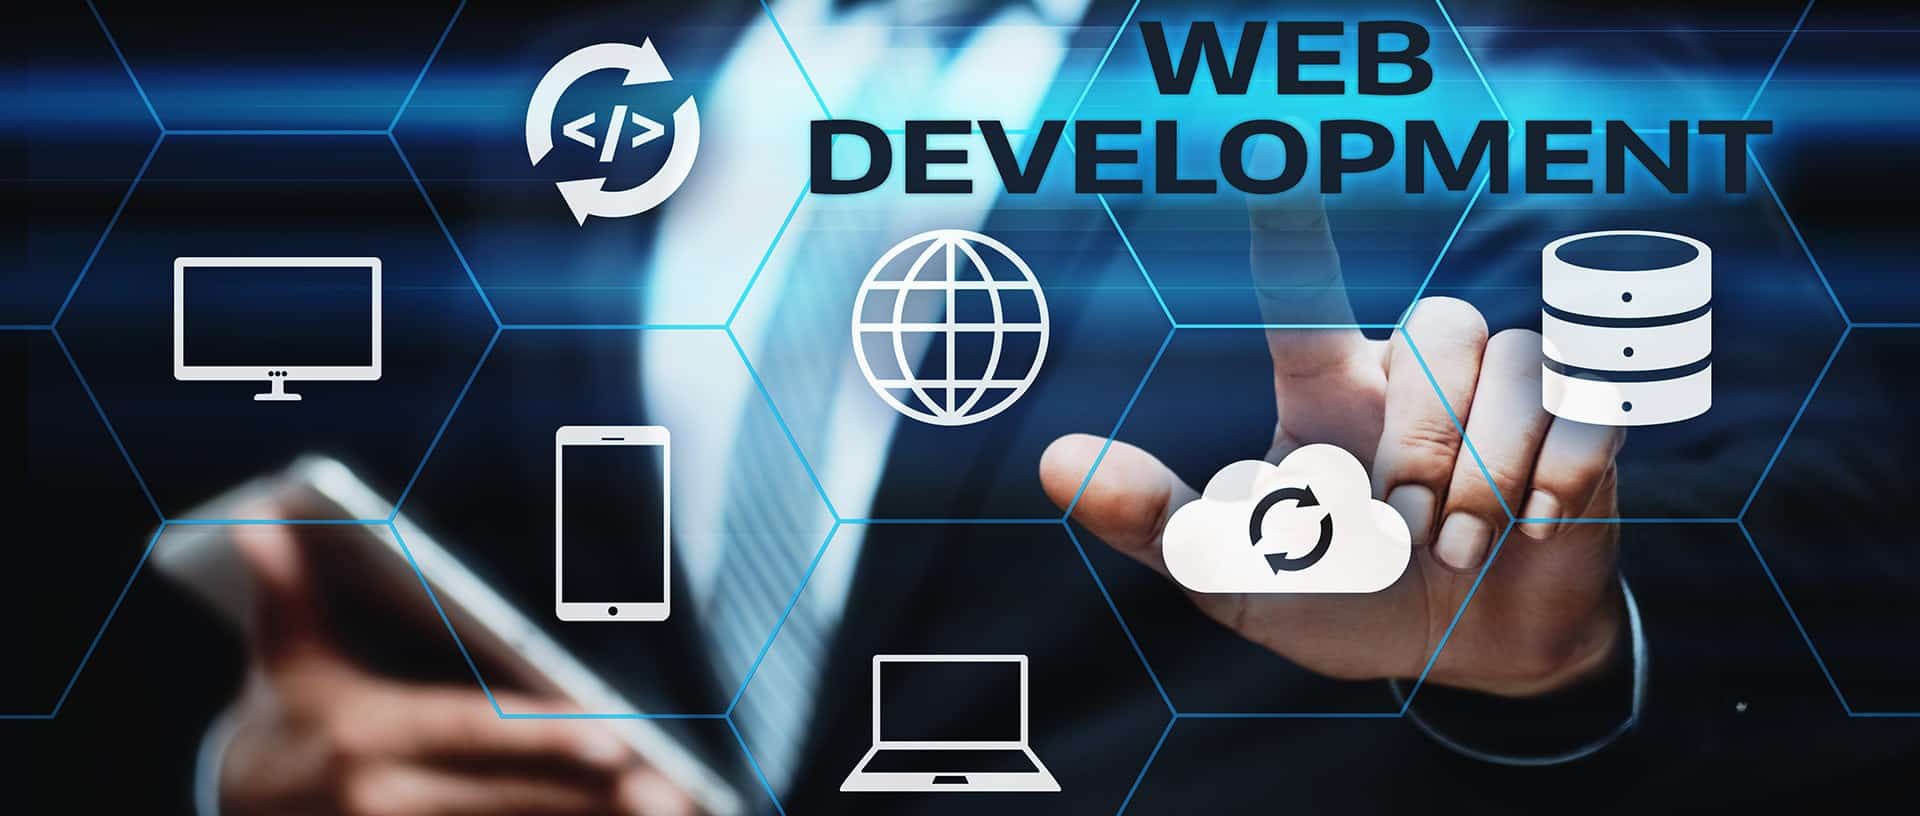 Web-development-main